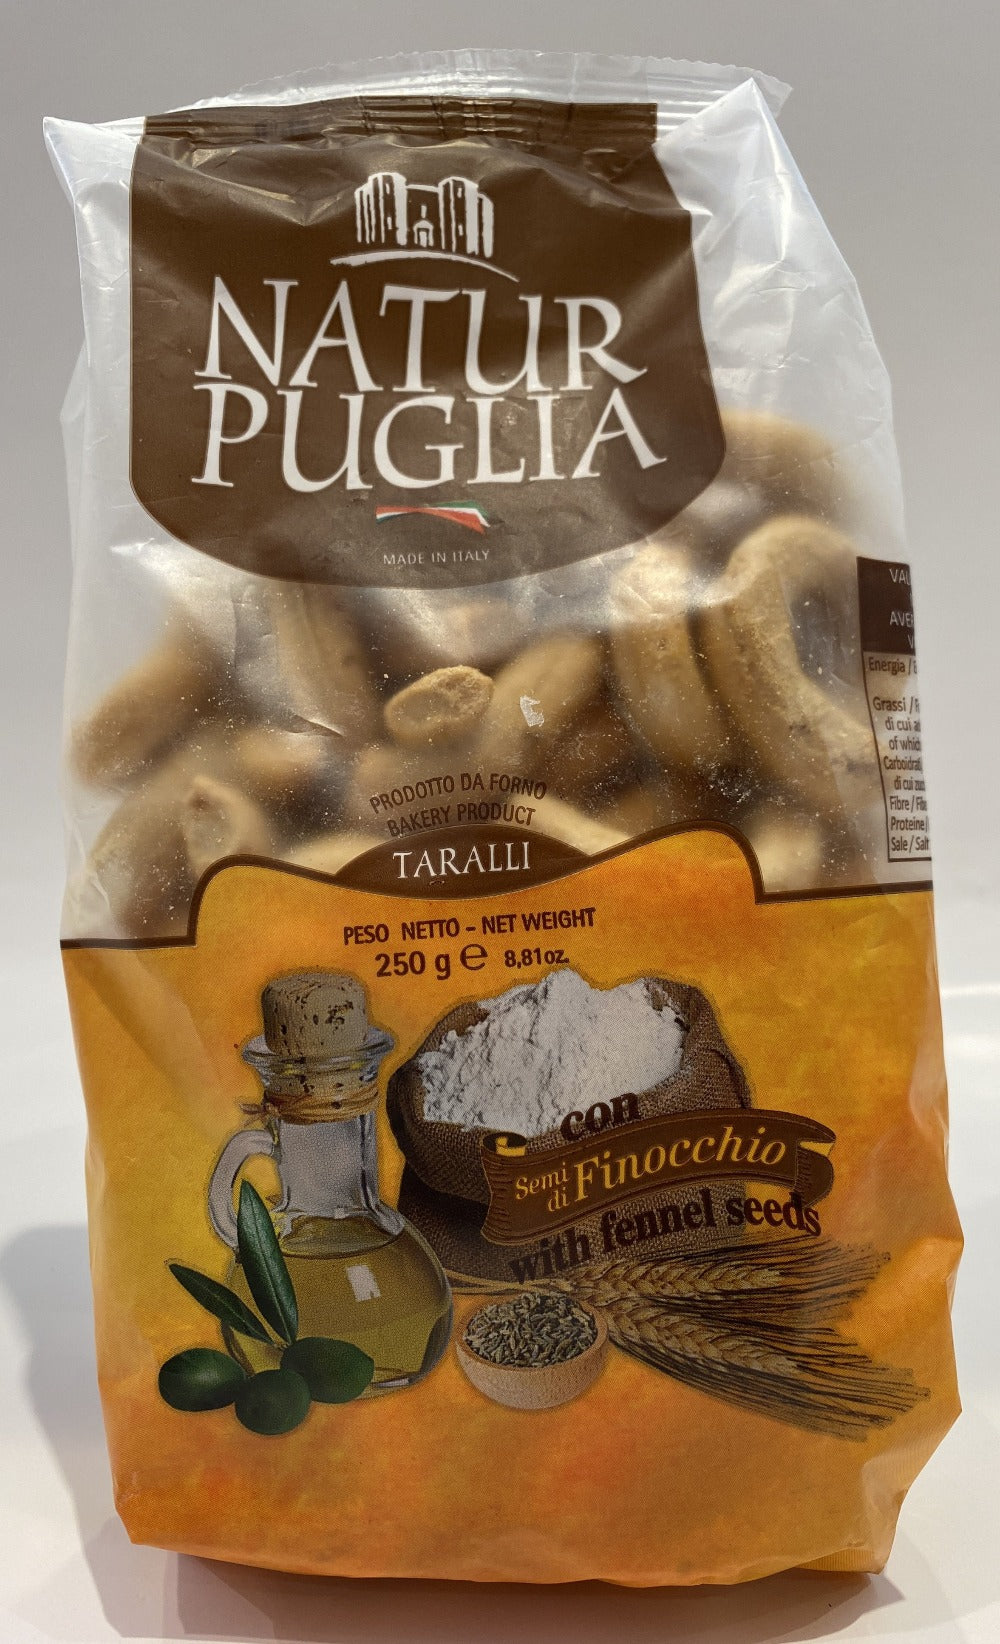 Natur Puglia - Taralli Fennel - 8.81 oz